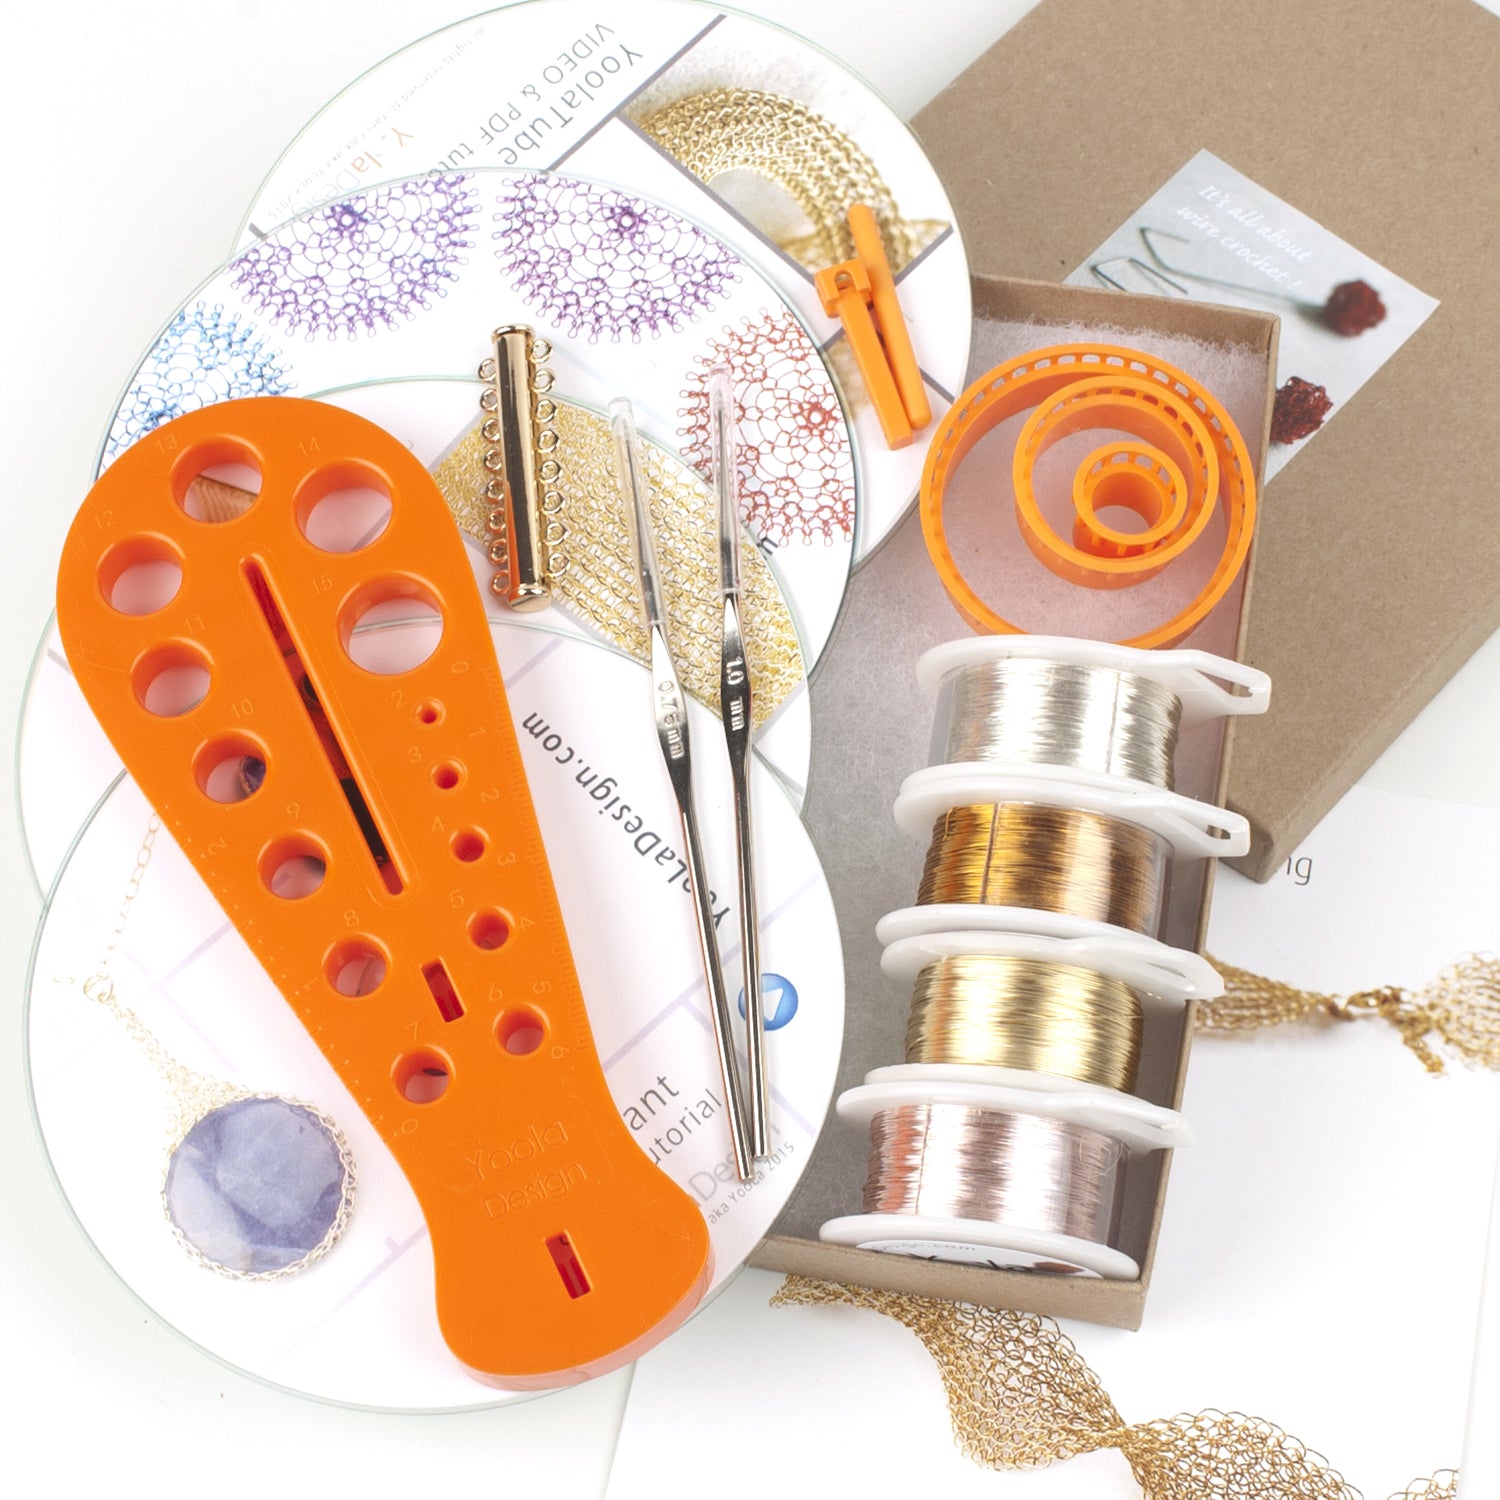 Wire crochet supply kit by YoolaDesign. - Yooladesign